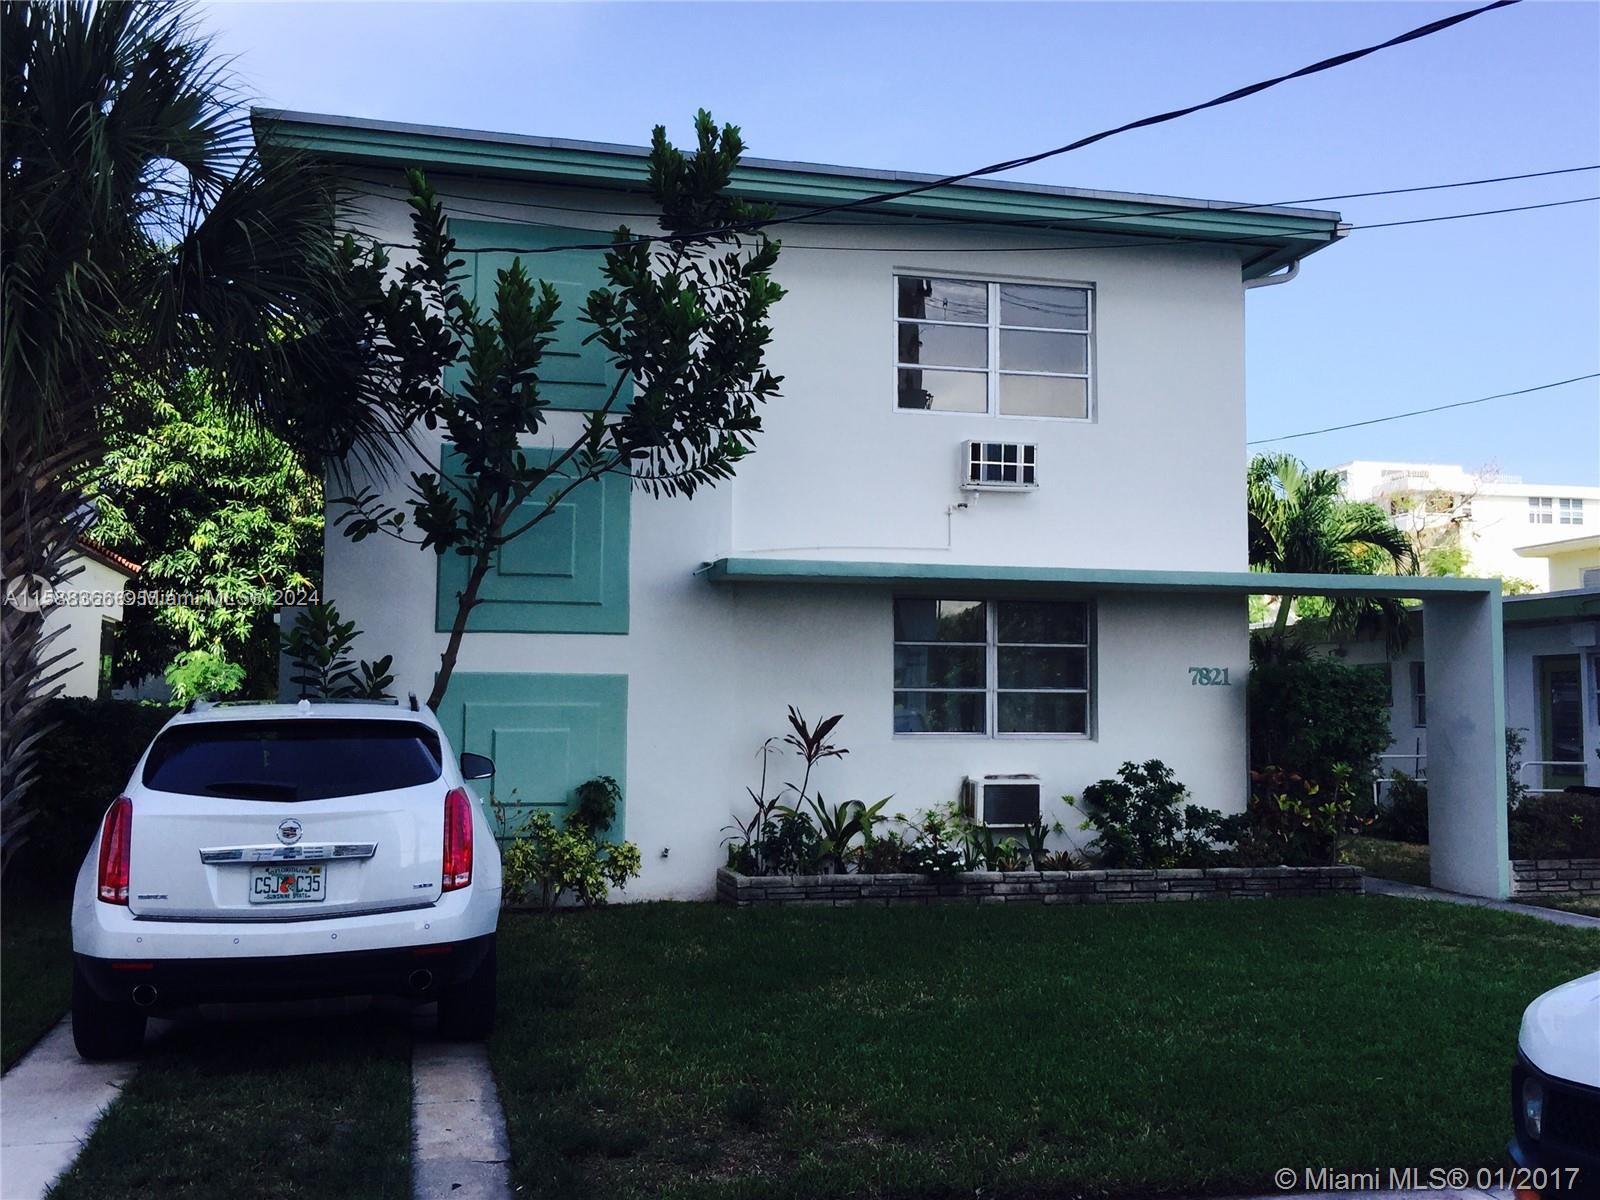 Rental Property at 7821 Byron Ave 4, Miami Beach, Miami-Dade County, Florida - Bedrooms: 2 
Bathrooms: 2  - $1,900 MO.